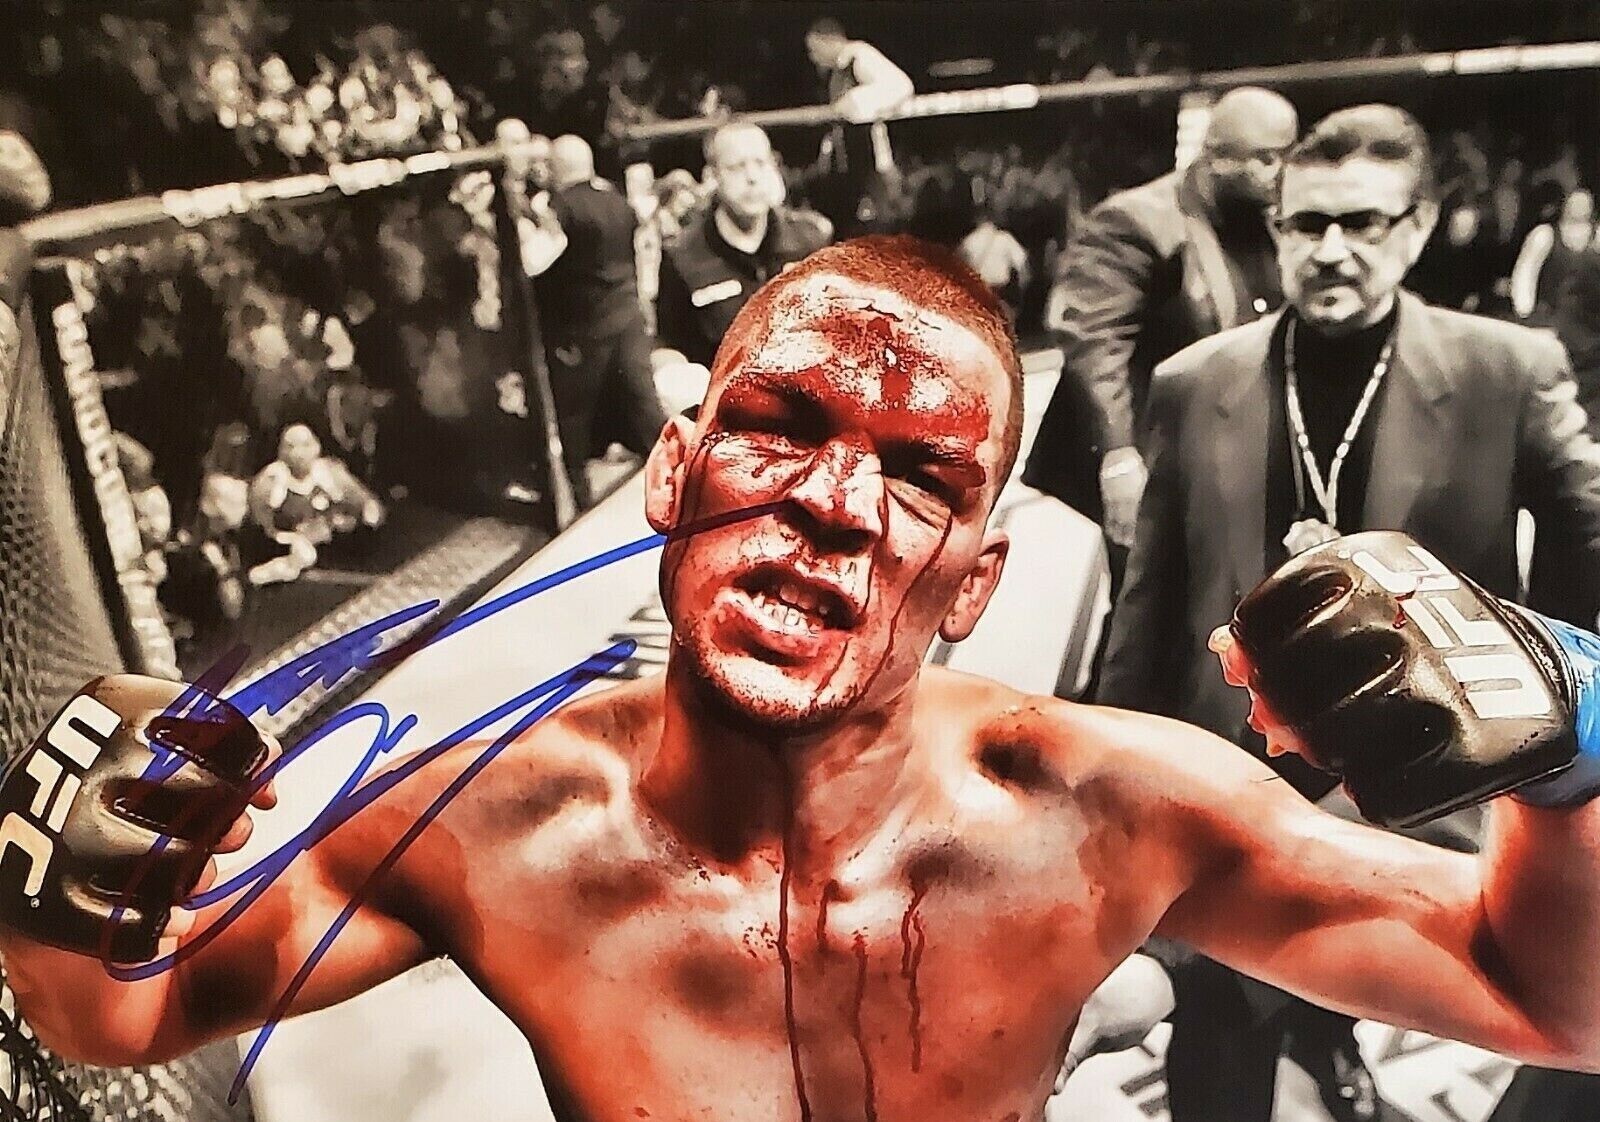 Nate Diaz Autographed Signed 8x10 Photo Poster painting ( UFC ) REPRINT